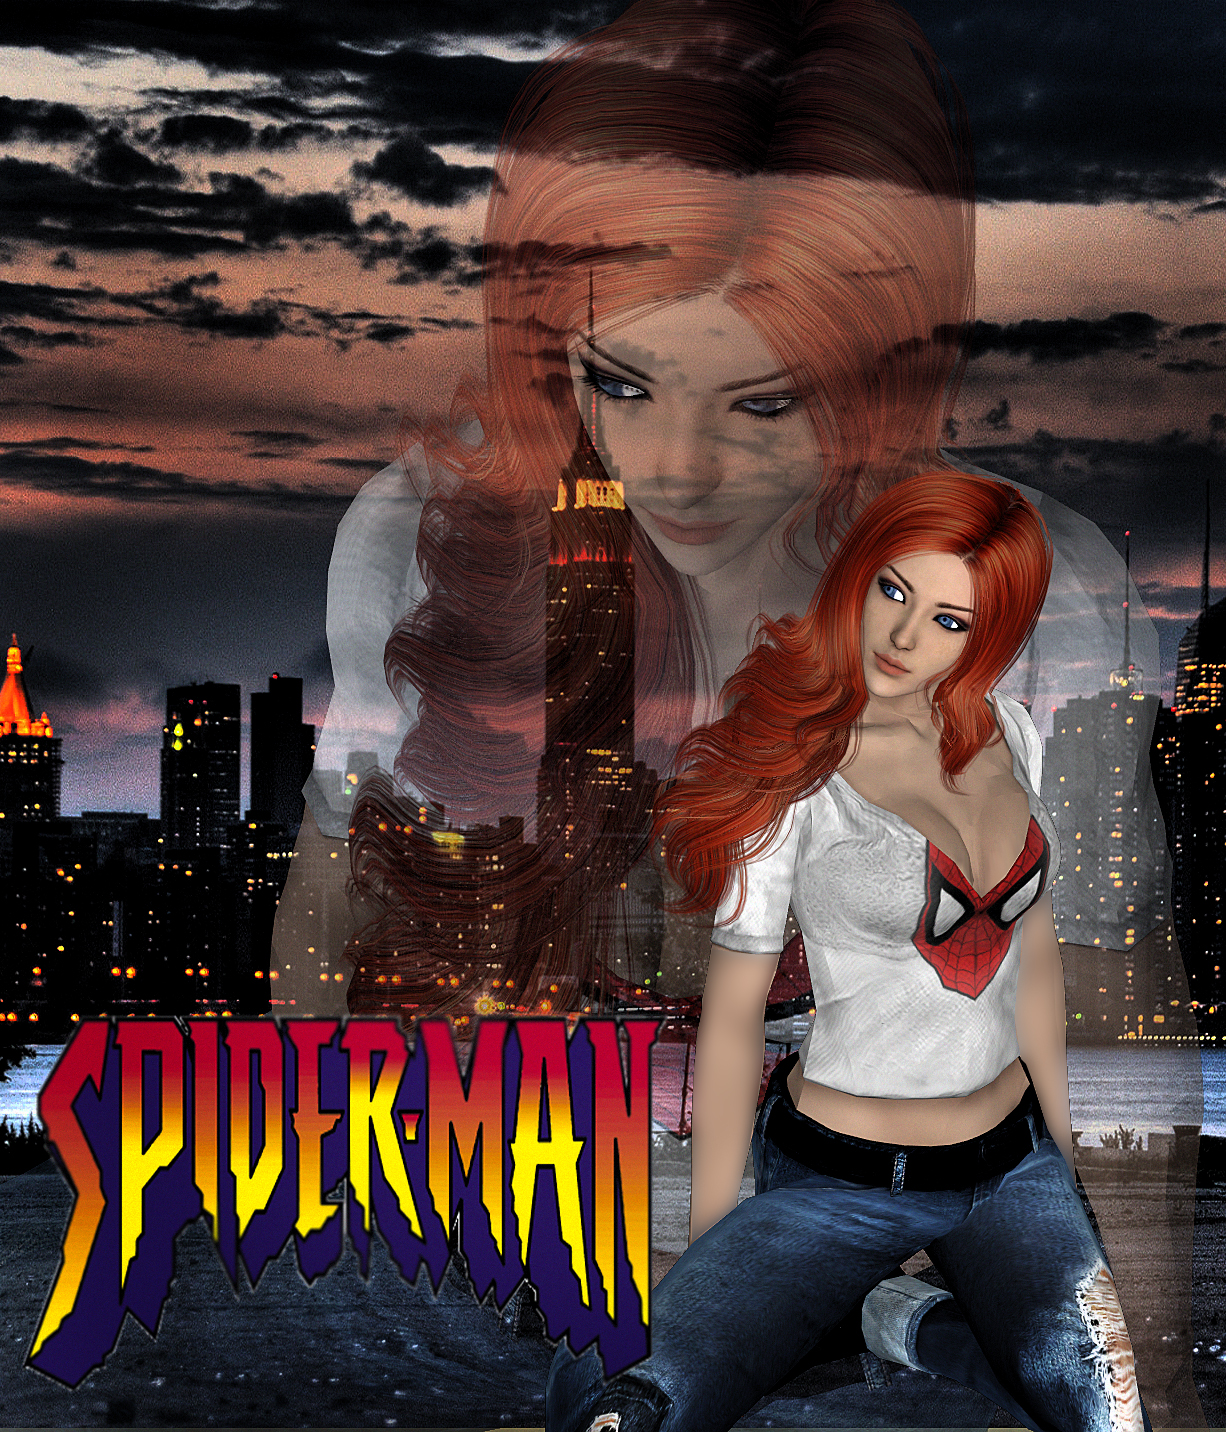 Venom (Spider-Man: Web of Shadows) by Citrus07 on DeviantArt